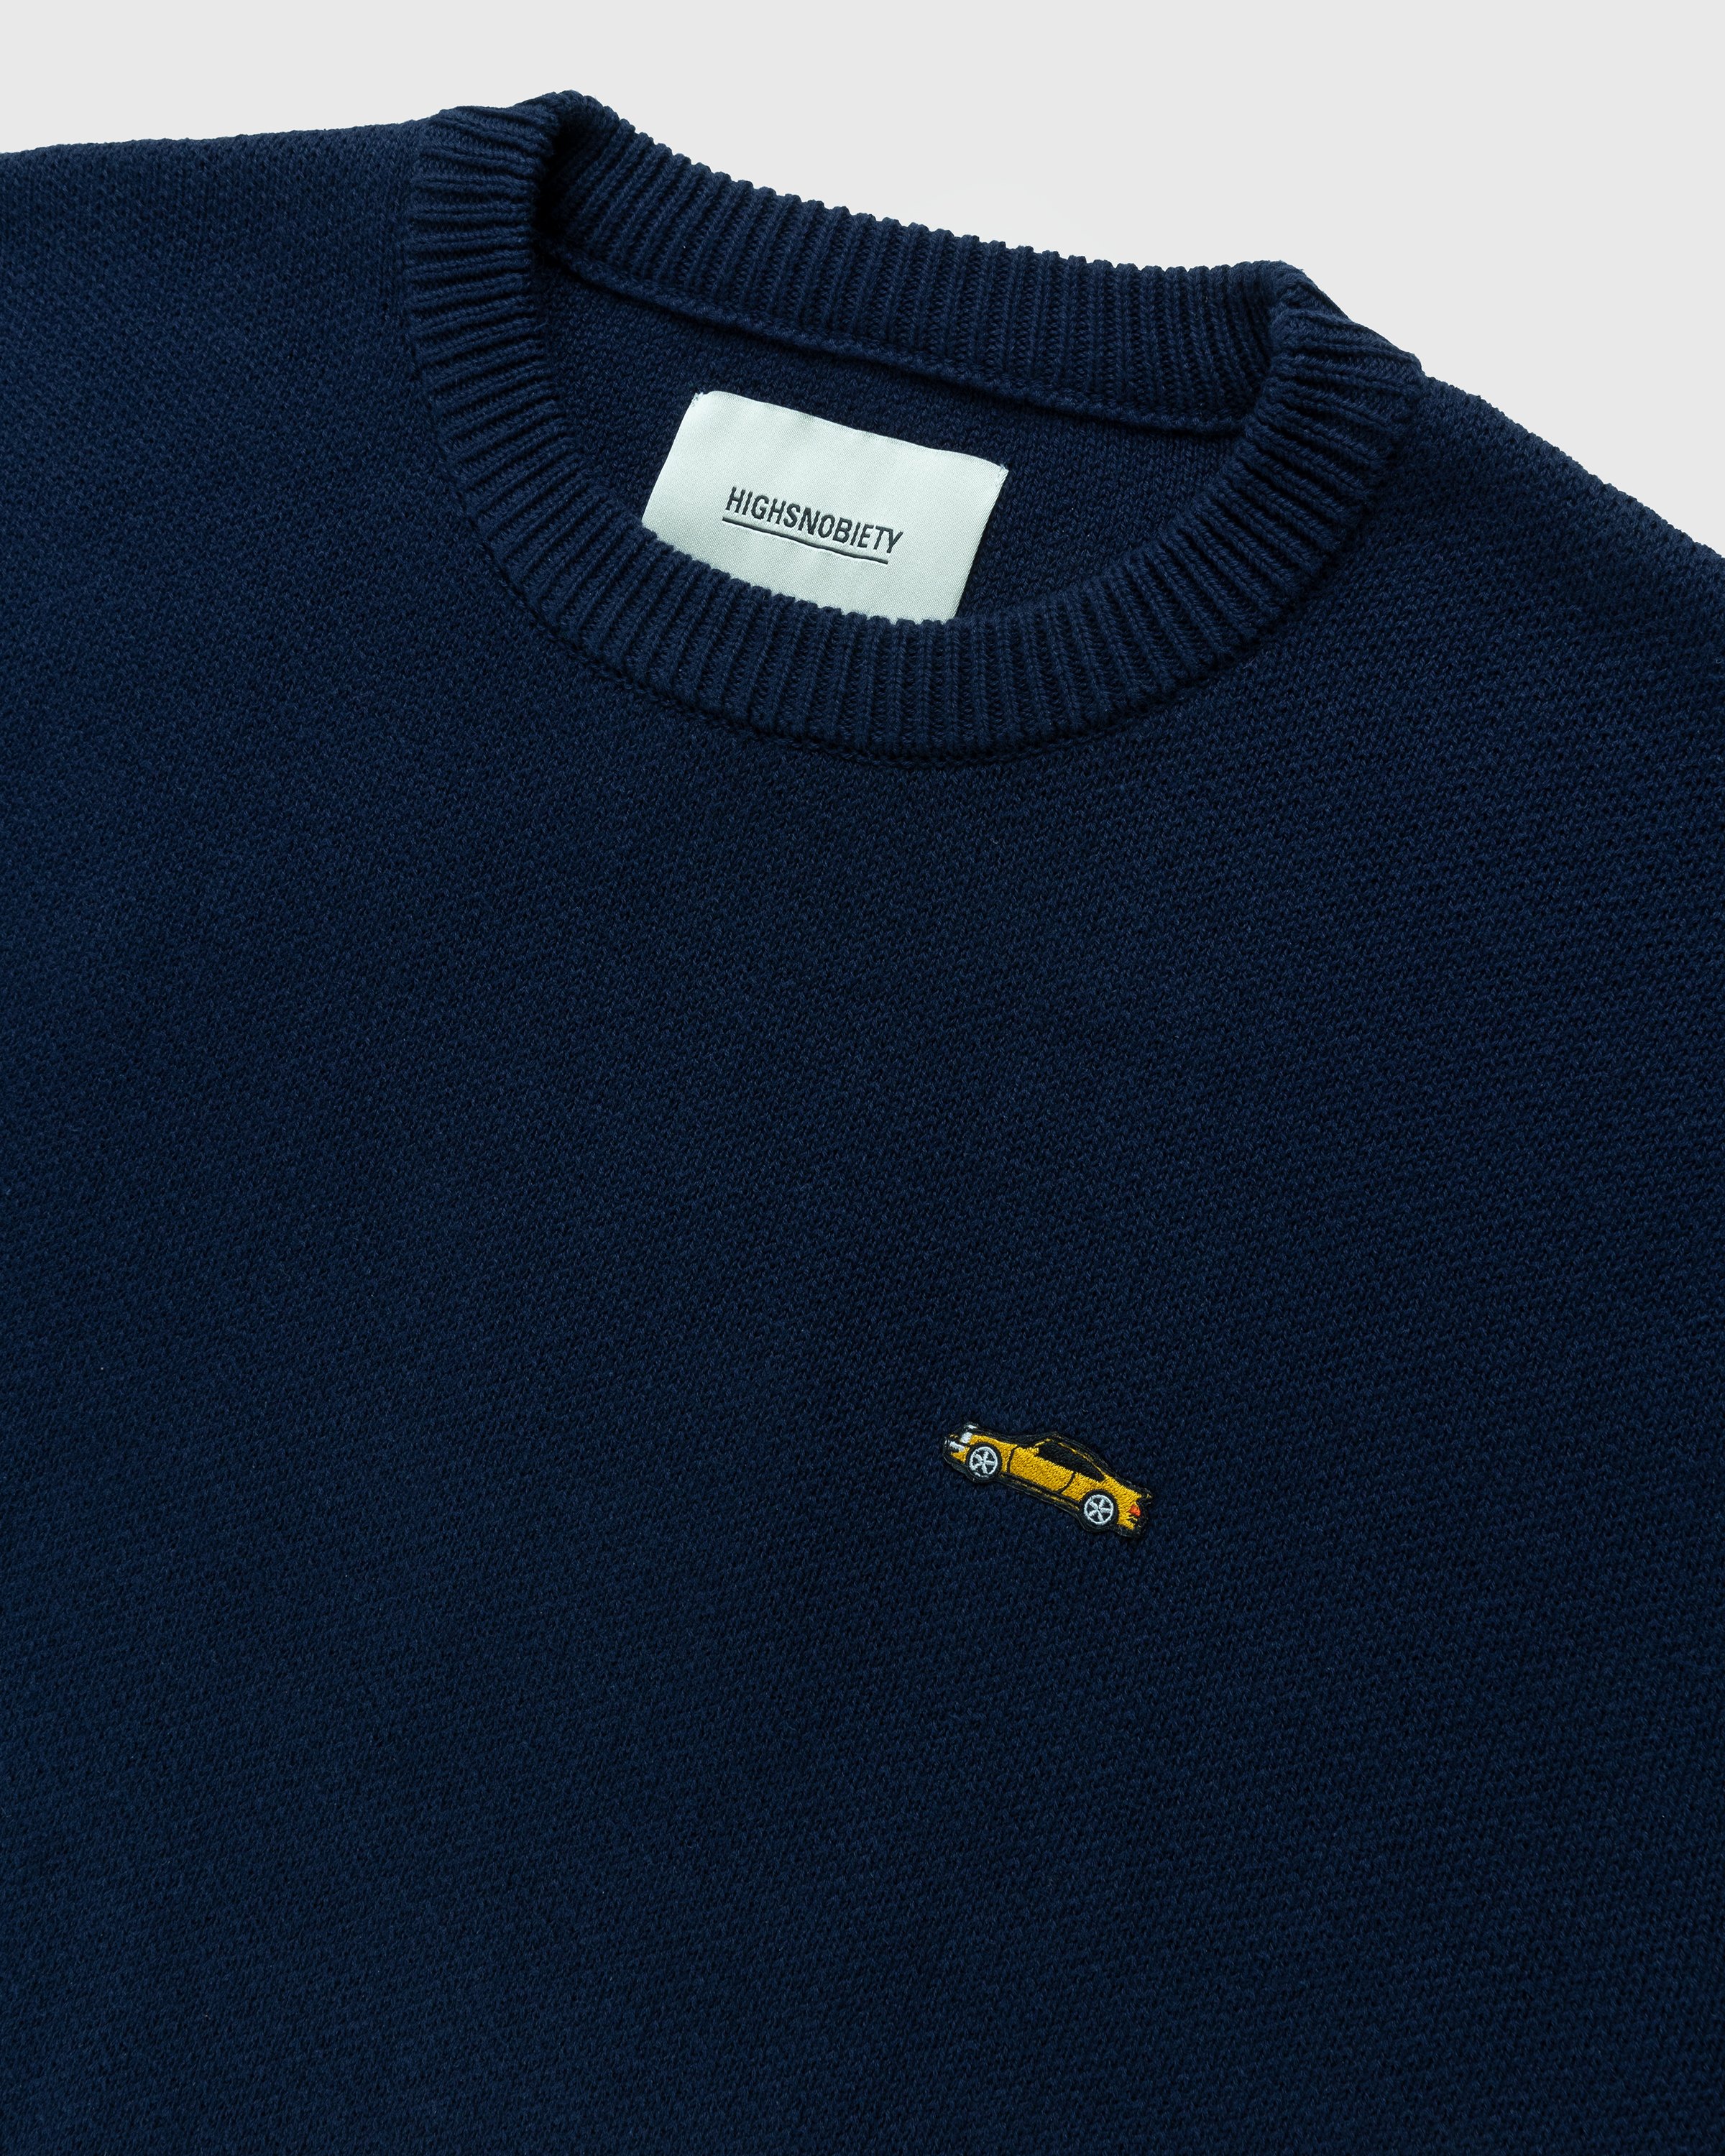 RUF x Highsnobiety - Knitted Crewneck Sweater Navy - Clothing - Blue - Image 4